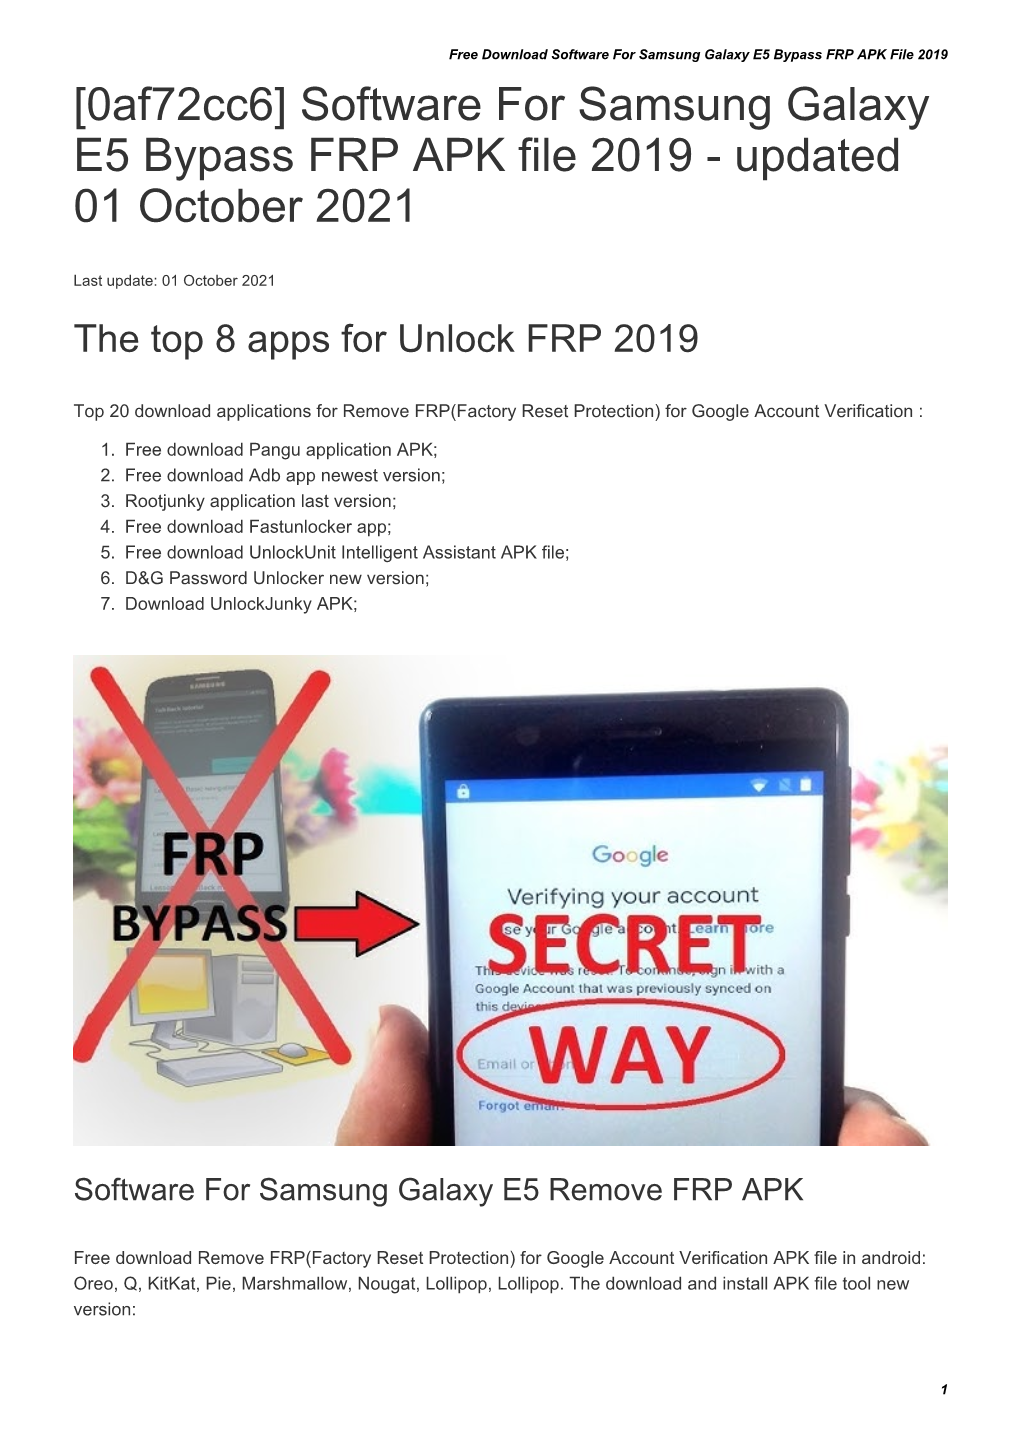 Software for Samsung Galaxy E5 Bypass FRP APK File 2019 [0Af72cc6] Software for Samsung Galaxy E5 Bypass FRP APK File 2019 - Updated 01 October 2021